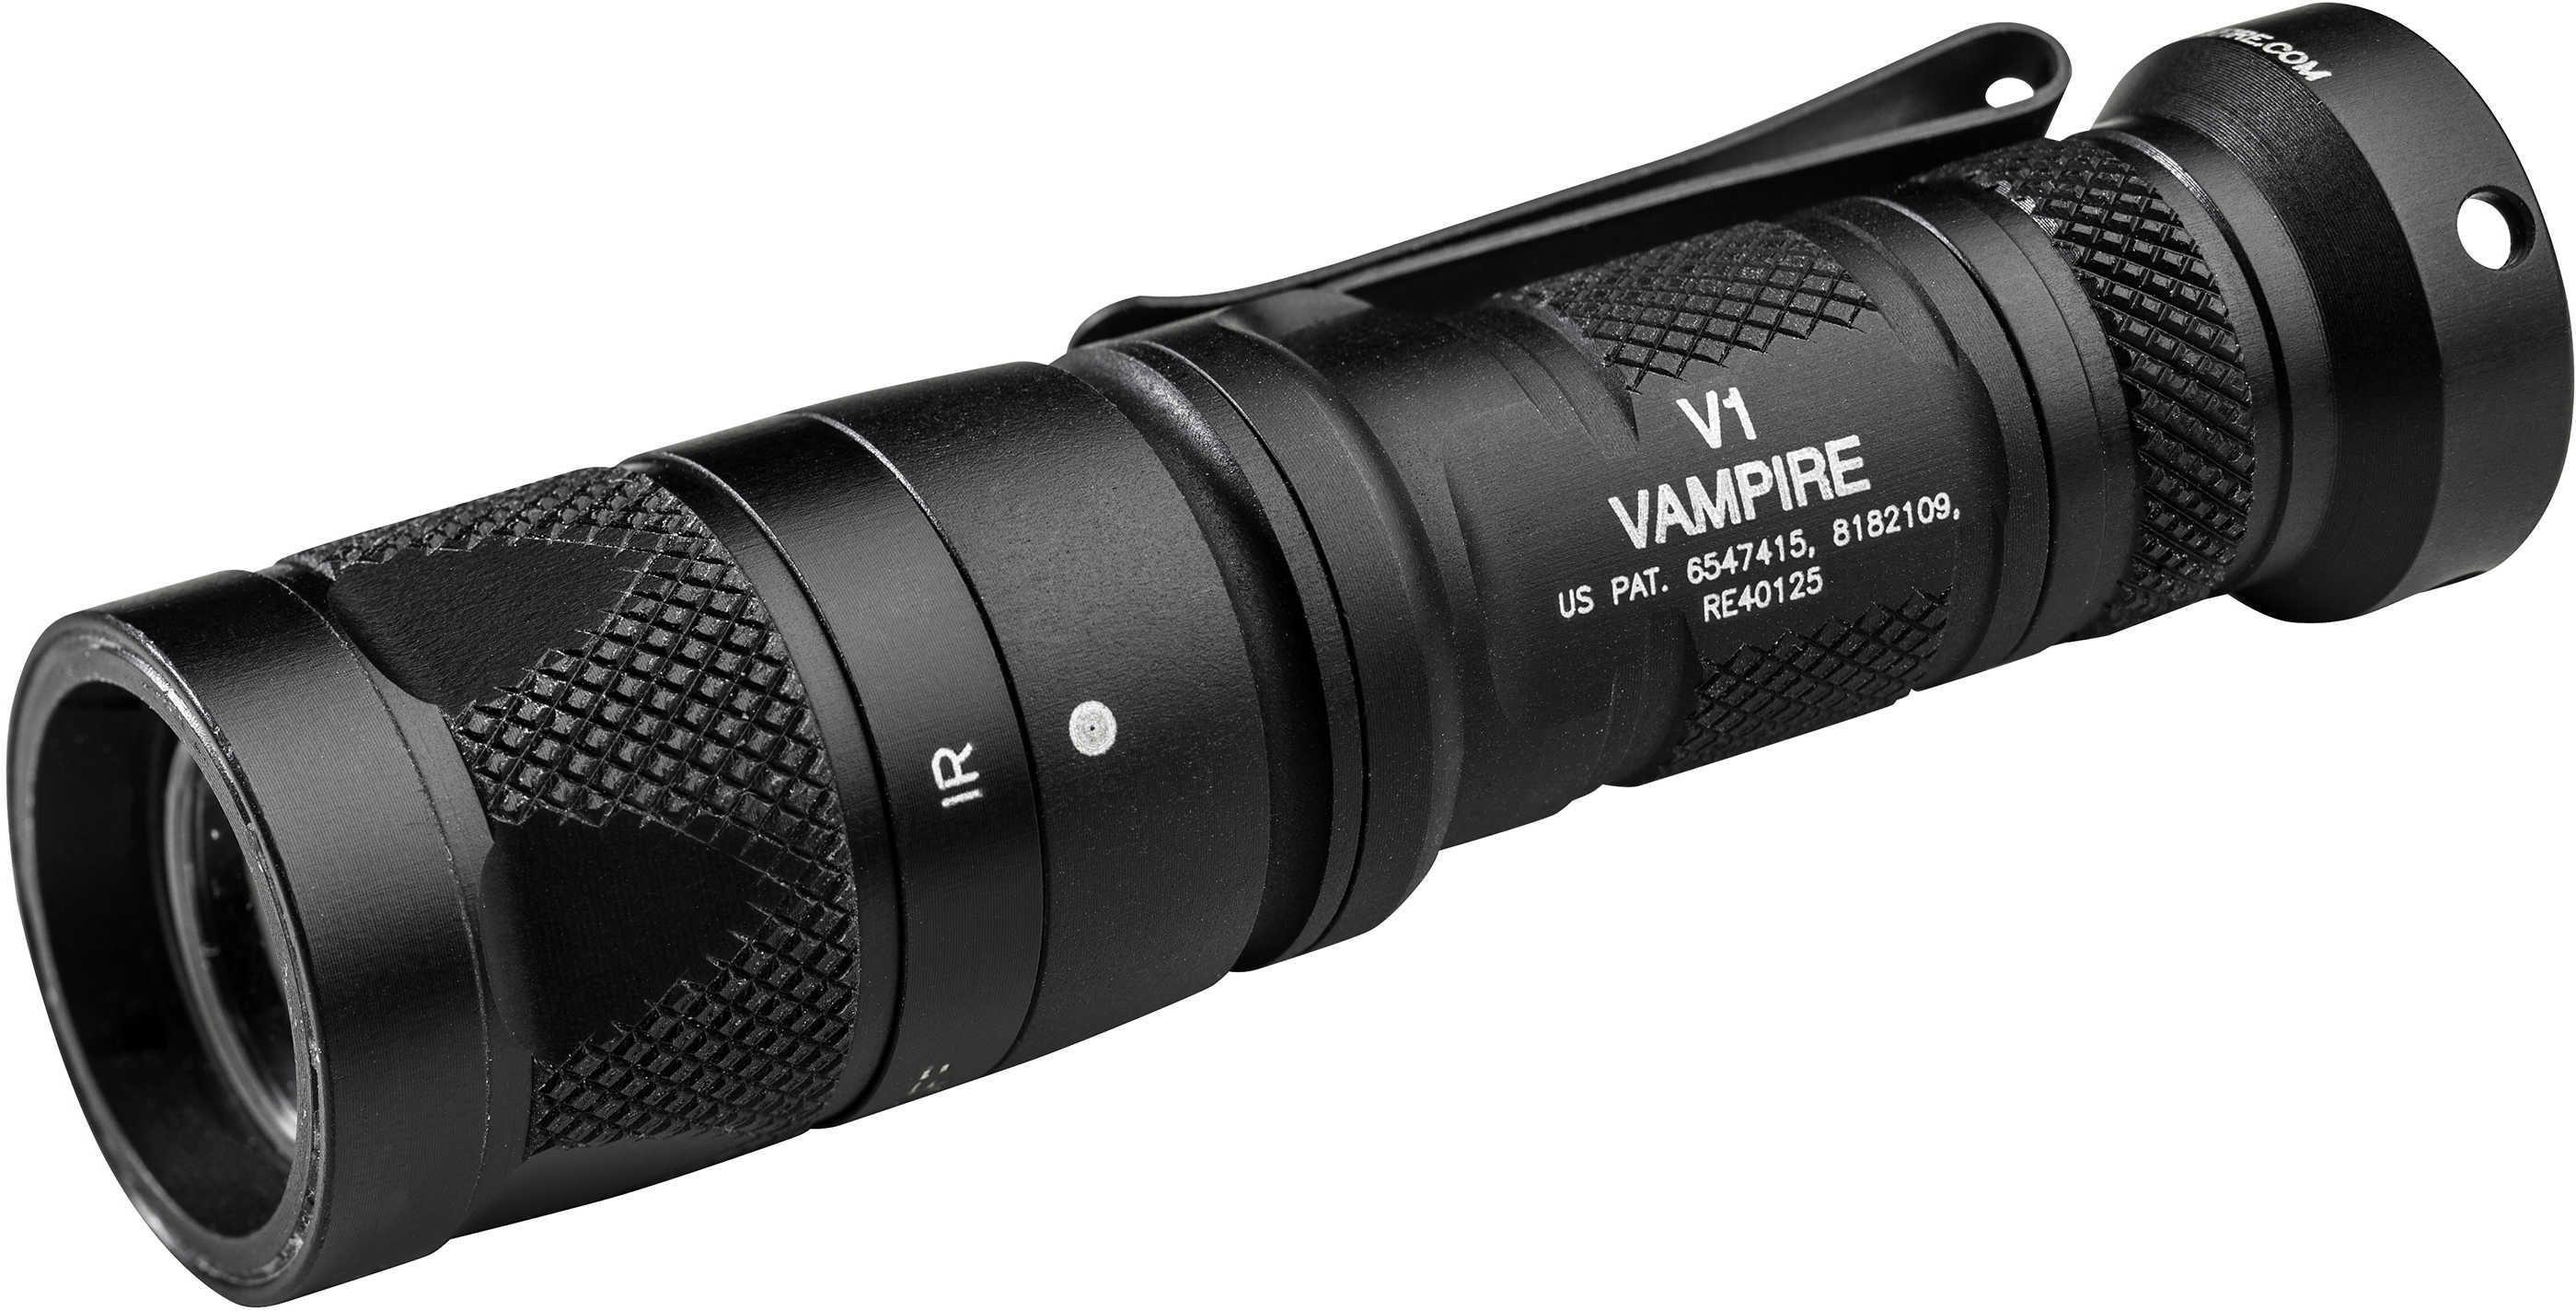 SureFire V1B Vampire Dual Output LED Flashlight w White IR